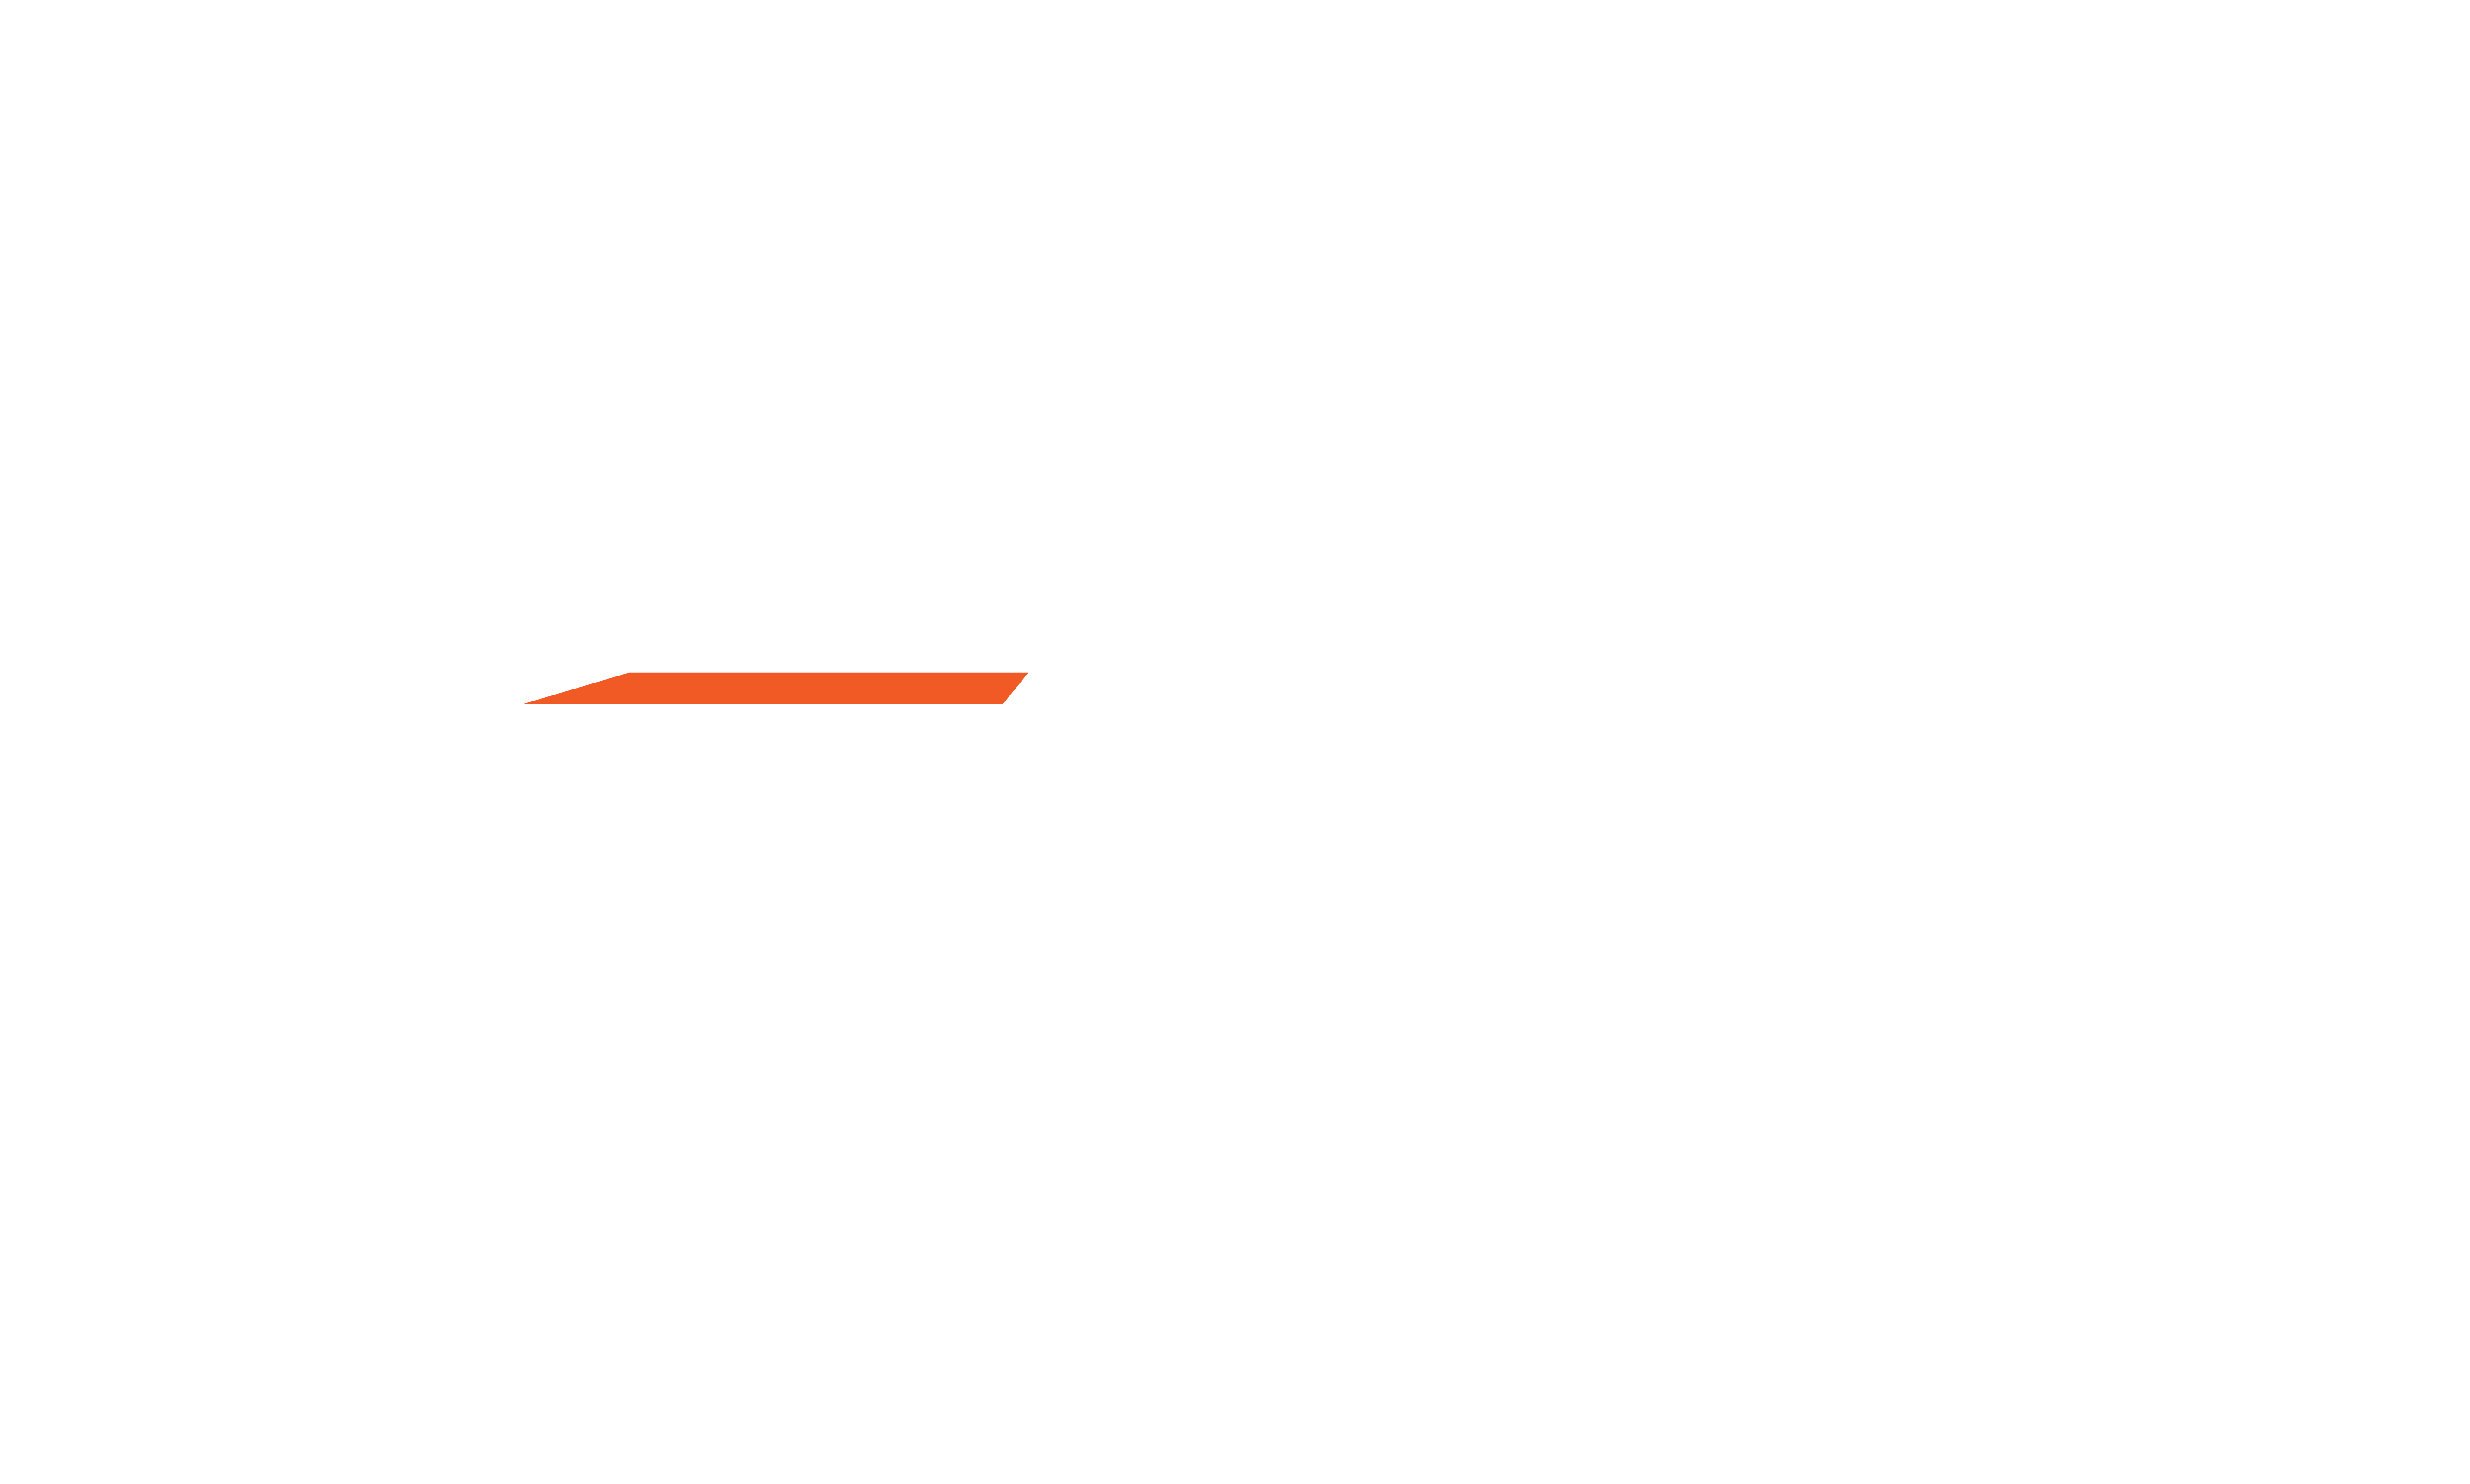 Superport